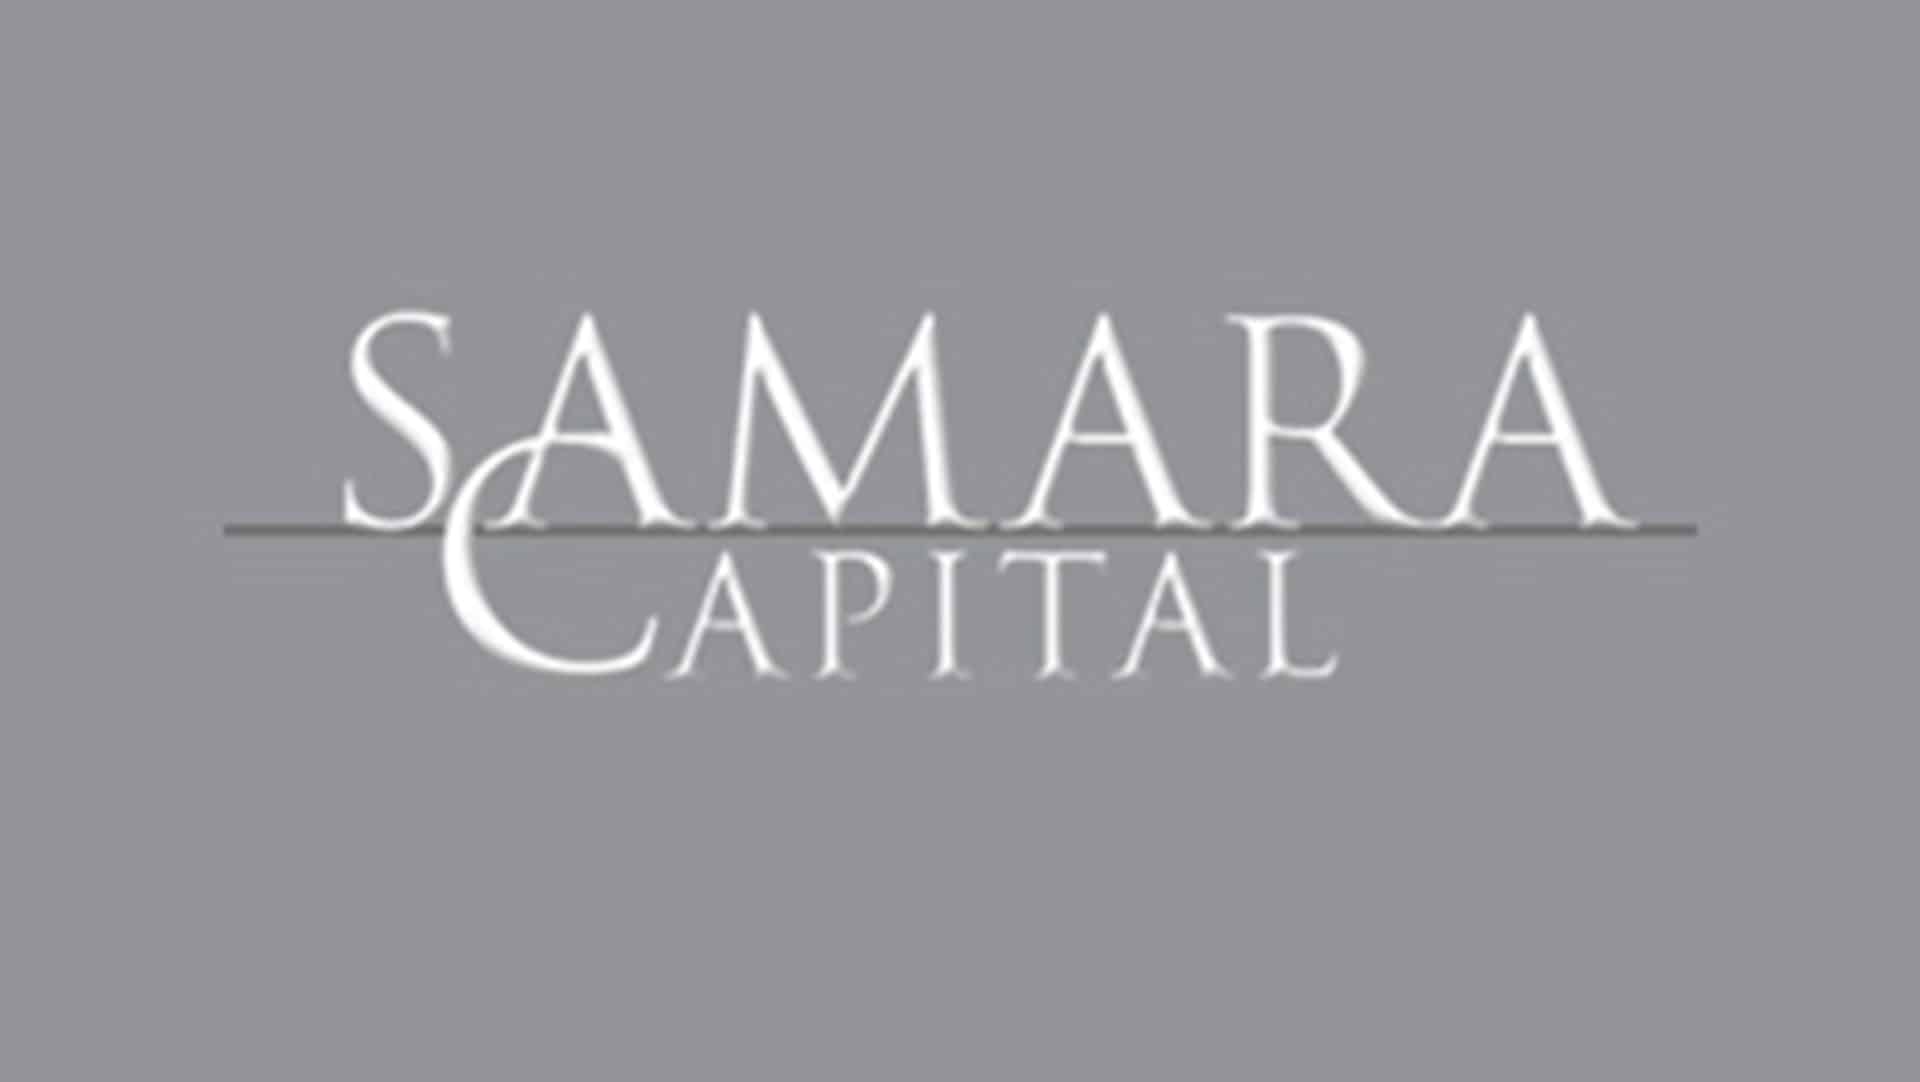 Amazon's partner Samara Capital plans USD 500 mn India-focussed fund